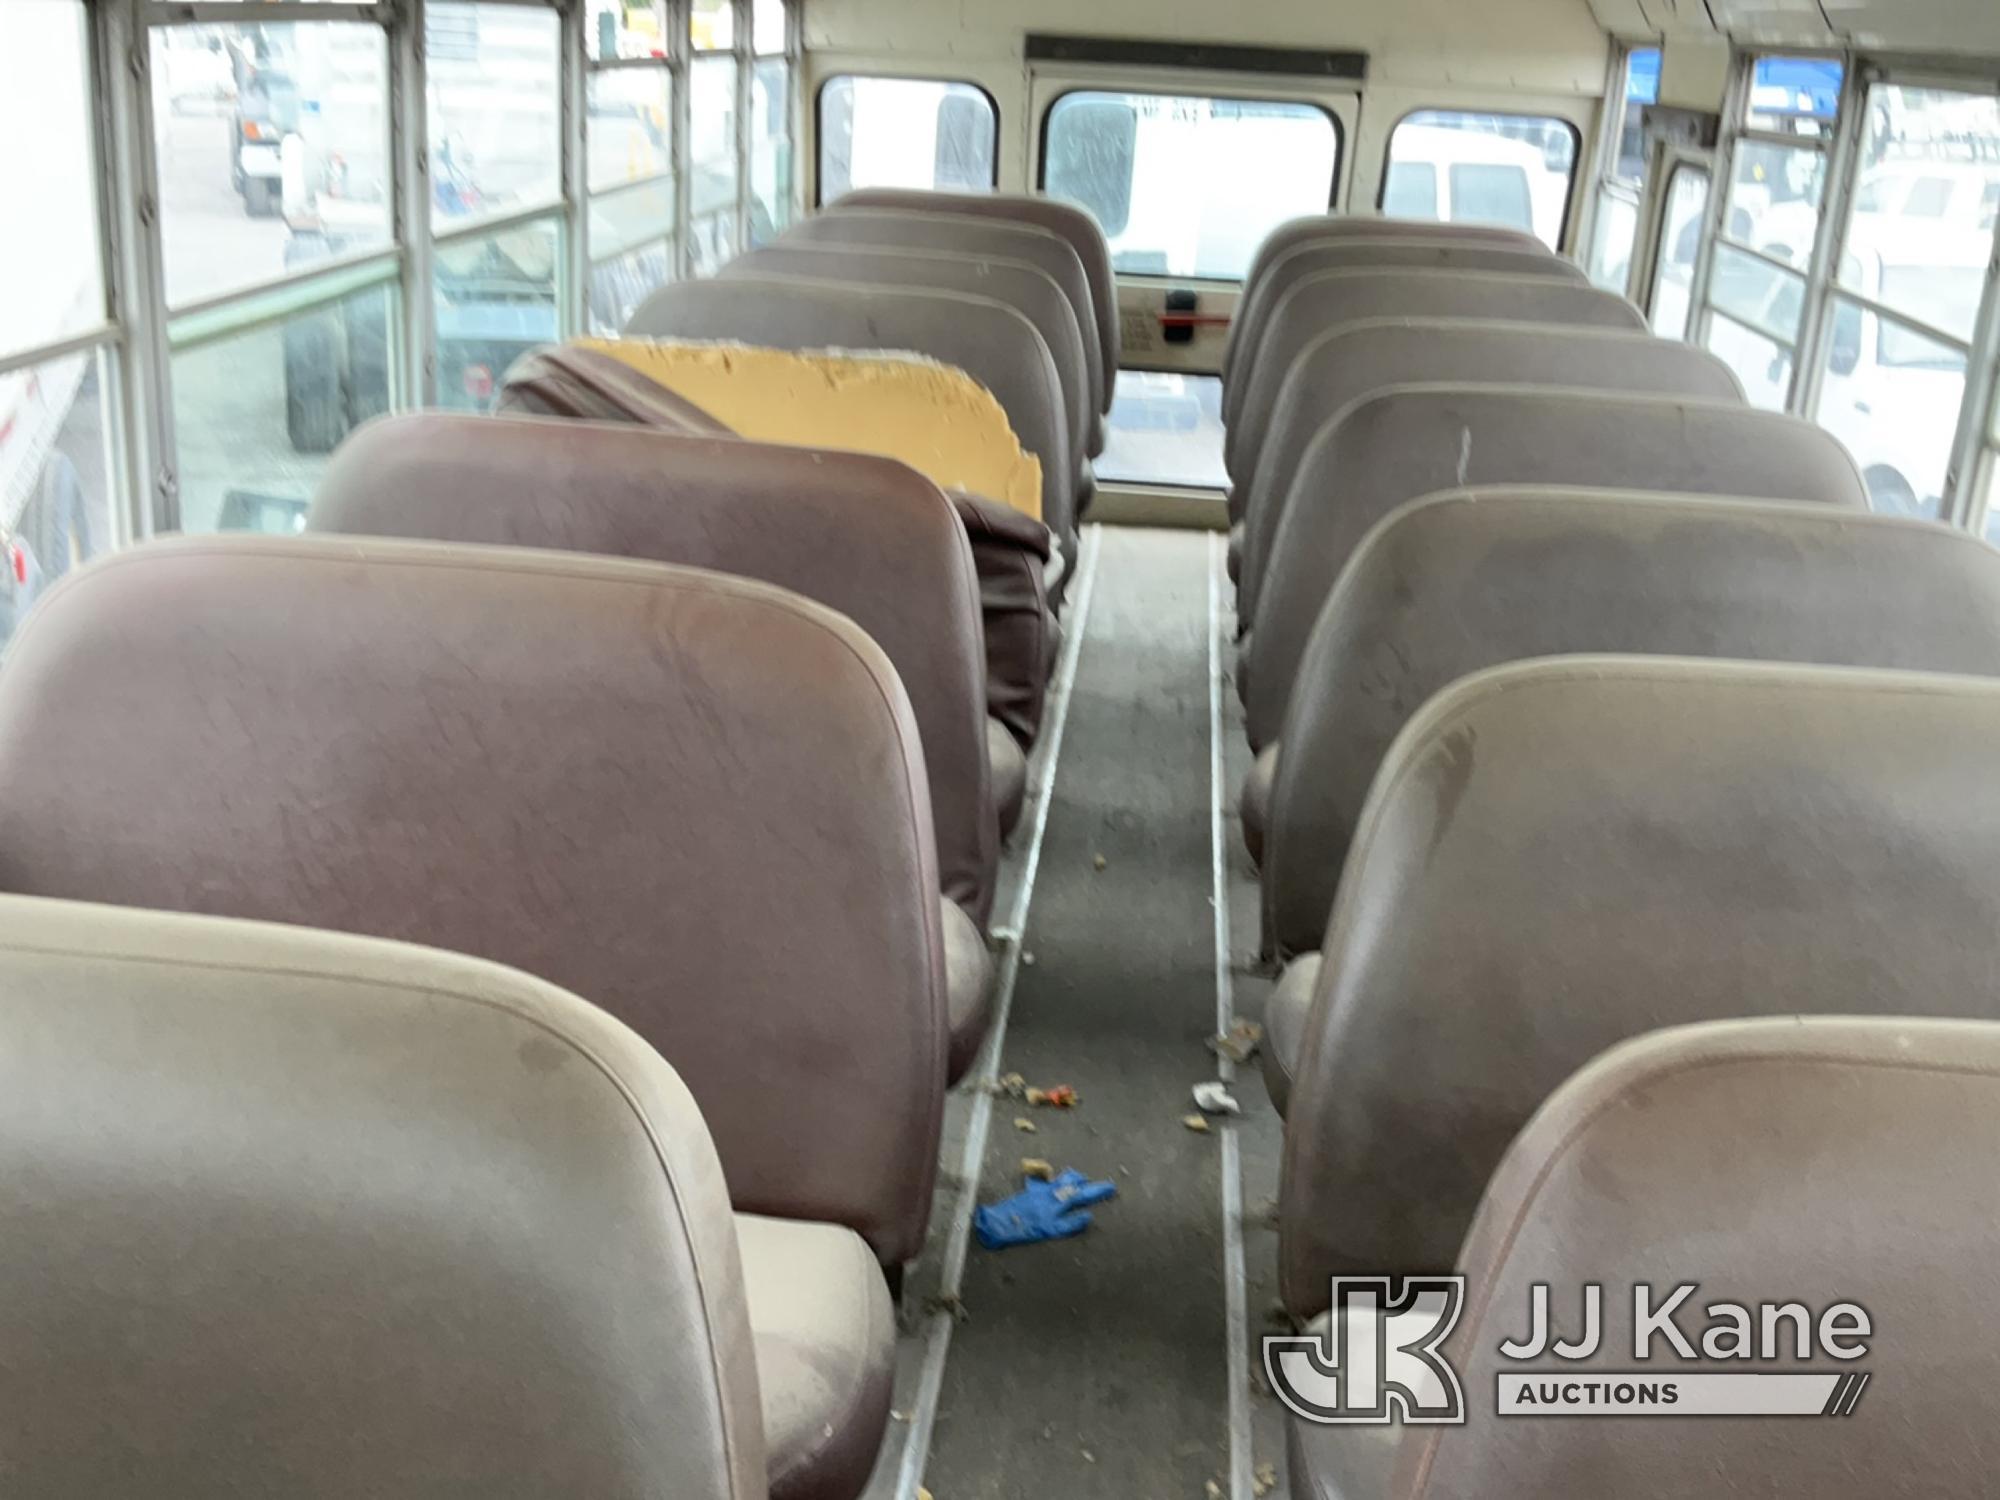 (Jurupa Valley, CA) 1990 Chevrolet 54 Passenger Passenger Bus Not Running, Paint Is Sun Damaged